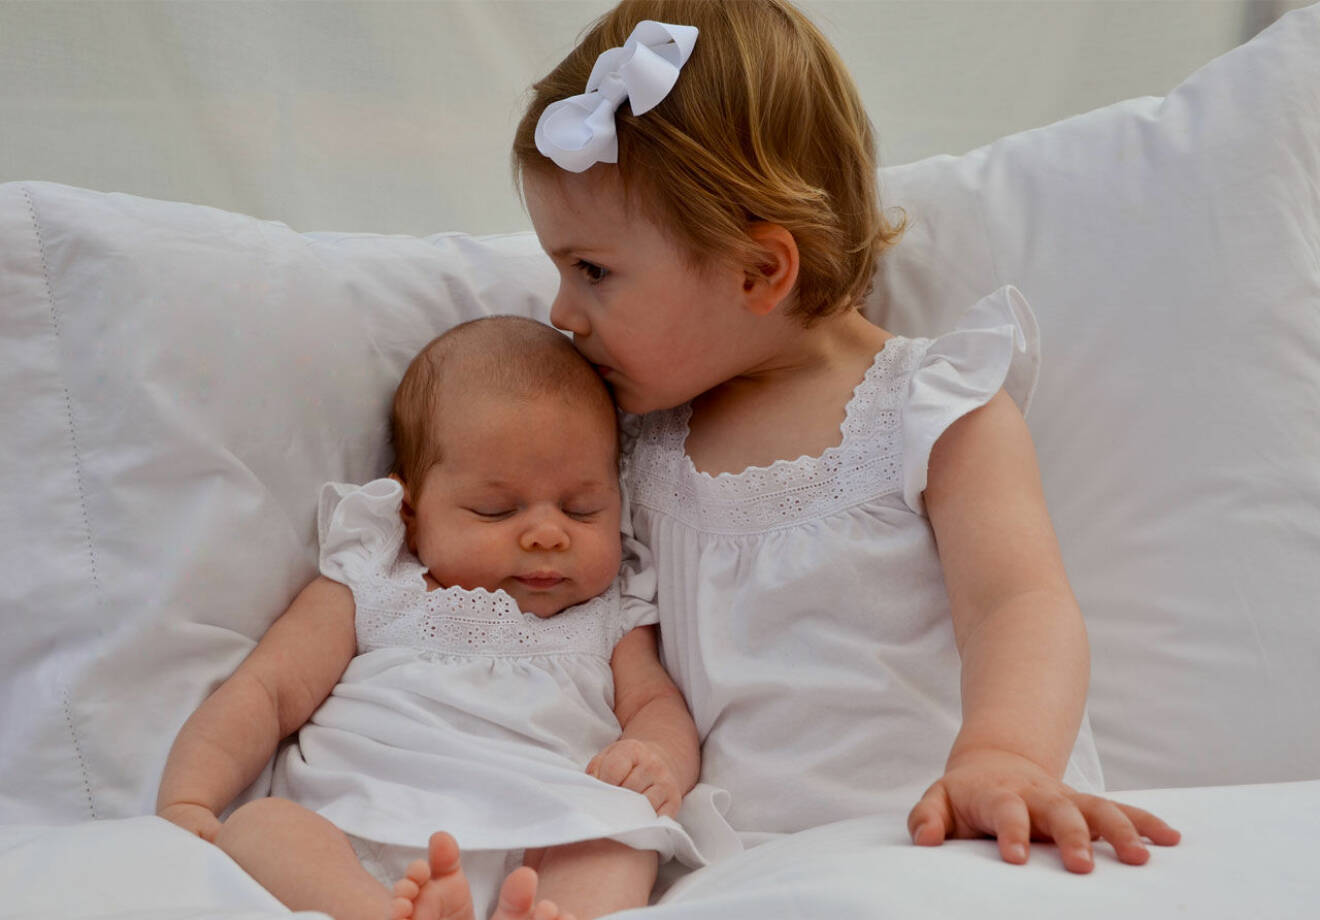 Prinsessan Estelle 2014 med sin nyfödda kusin prinsessan Leonore.